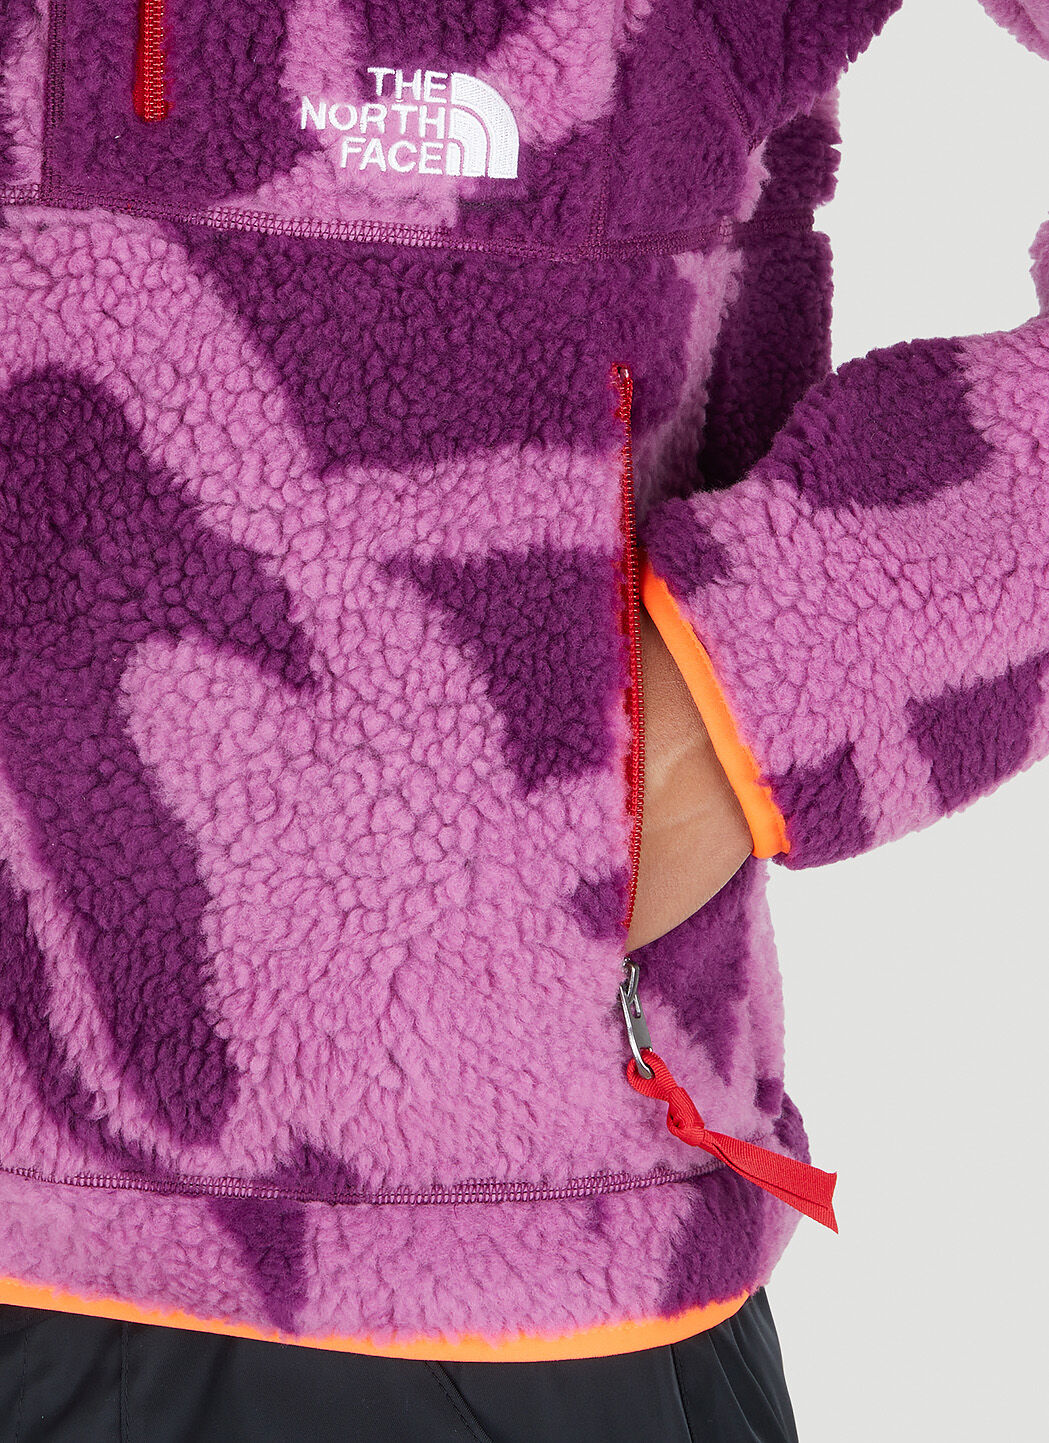 The North Face x KAWS Freeride Fleece Jacket in Purple | LN-CC®